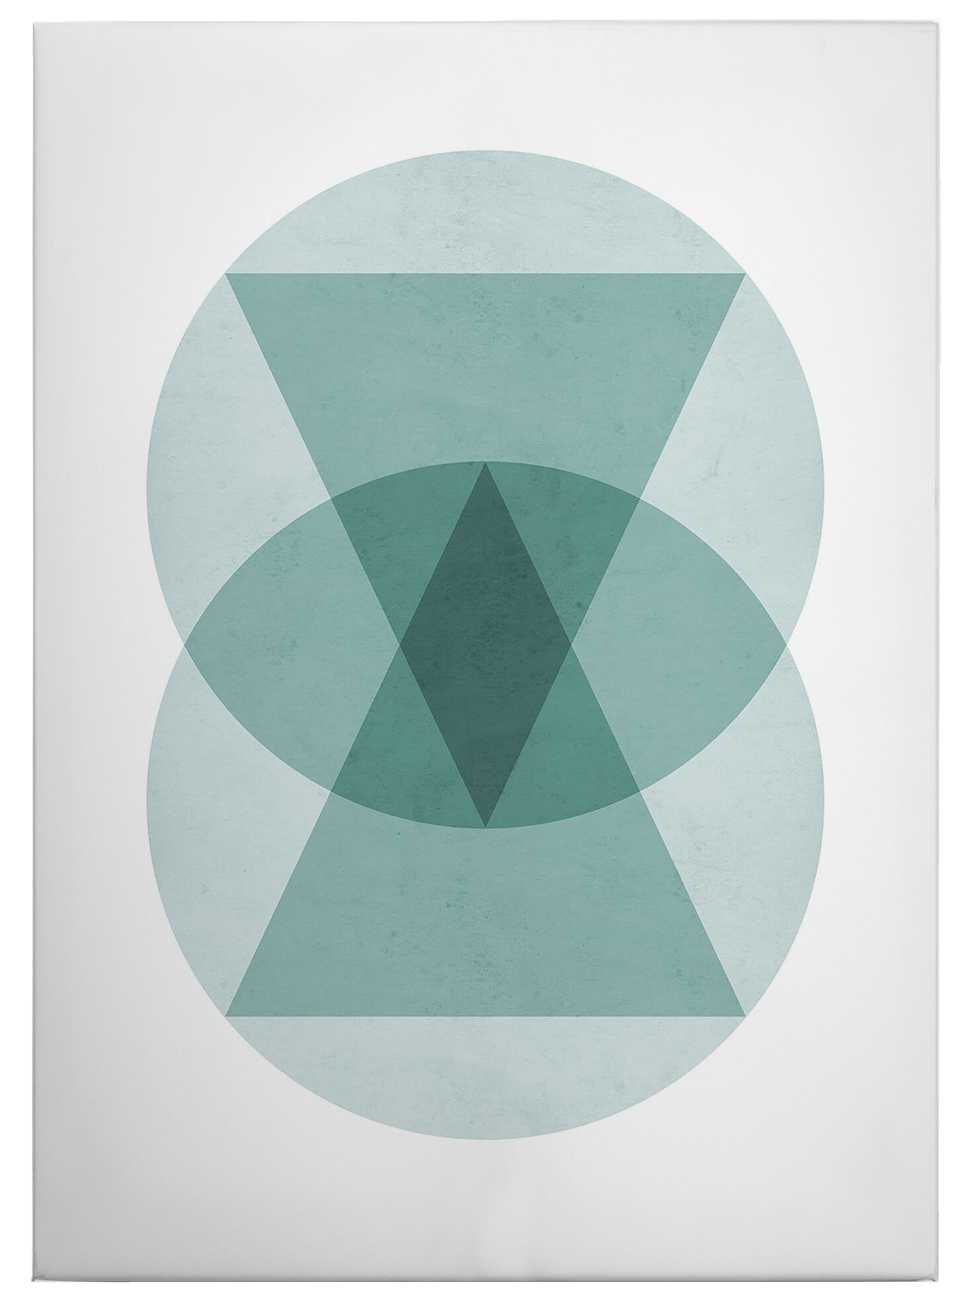             Cuadro lienzo motivo geométrico círculos triángulos - 0,50 m x 0,70 m
        